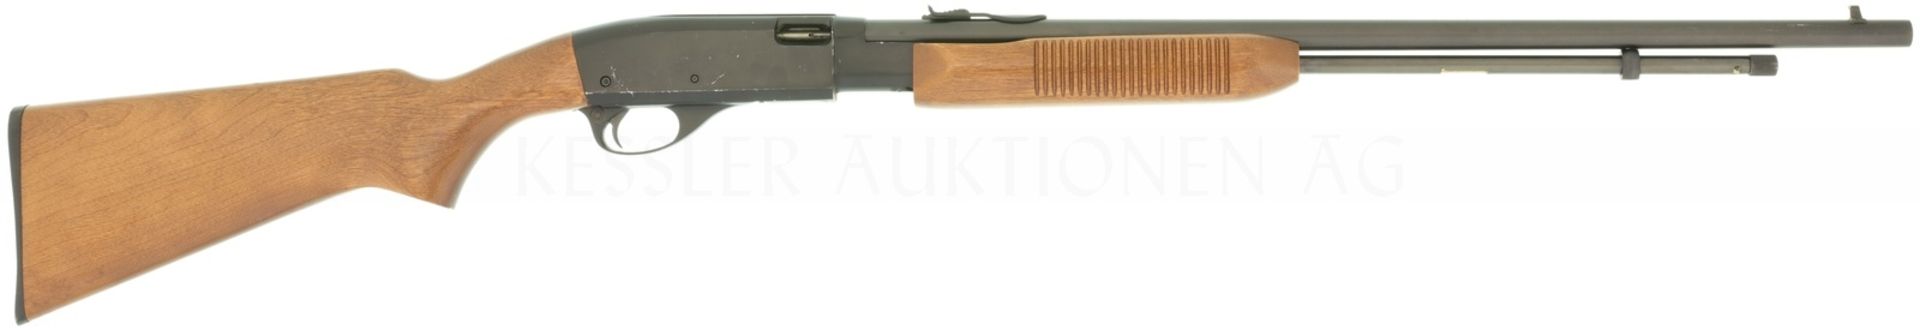 Vorderschaftrepetierbüchse, Remington Fieldmaster Mod. 572, Kal. .22s.l.lr